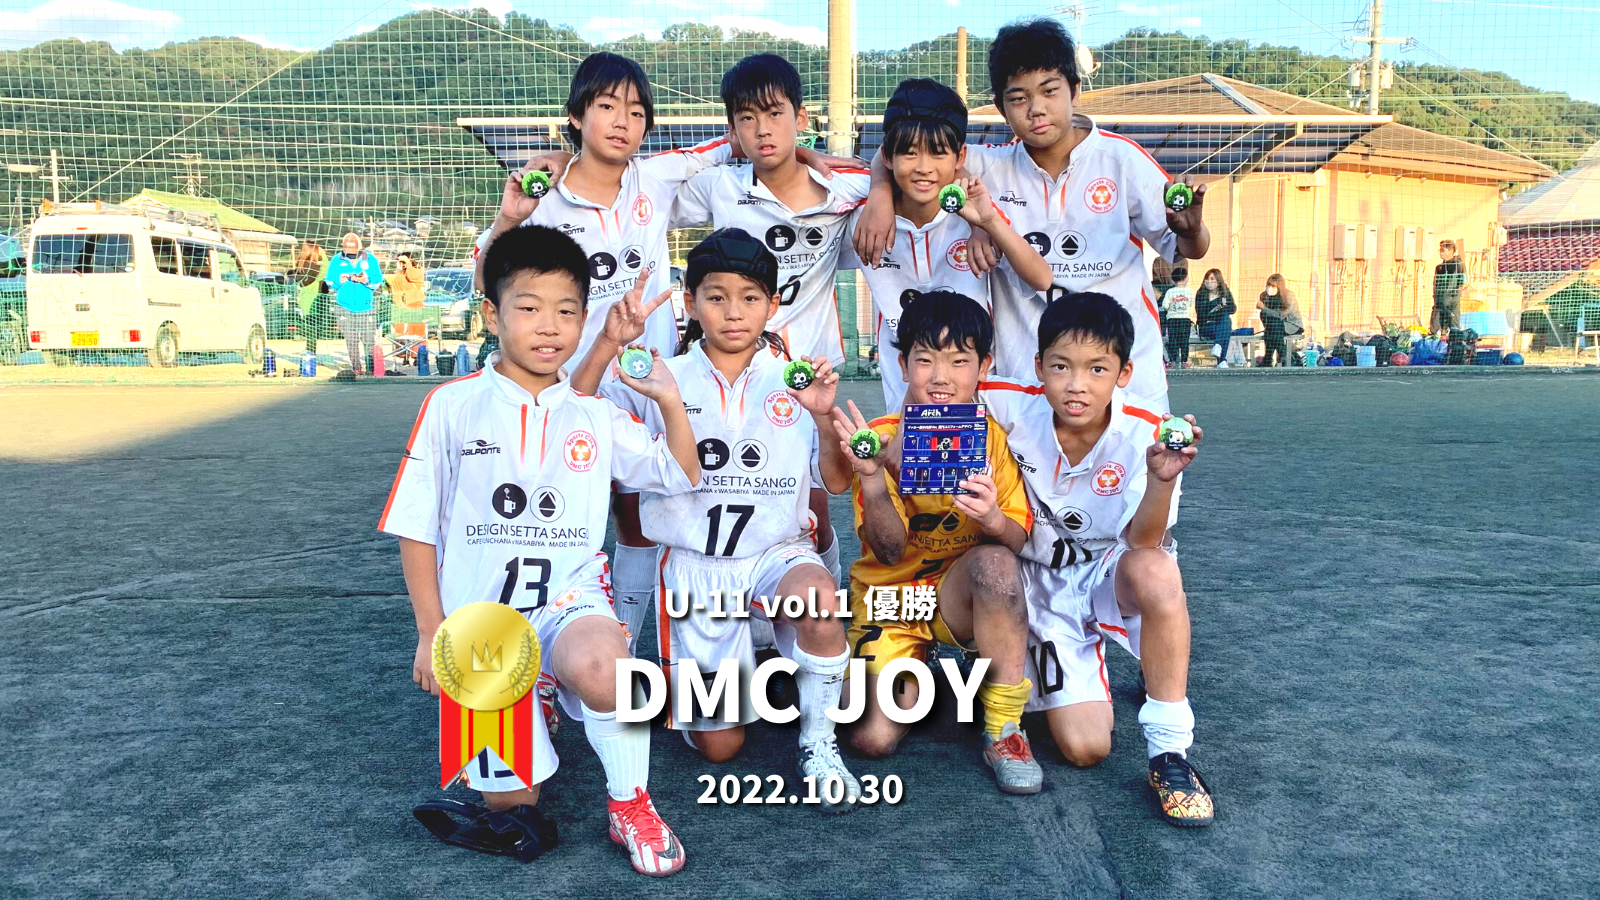 2022-10-30 U-11 vol.1　DMC JOY 